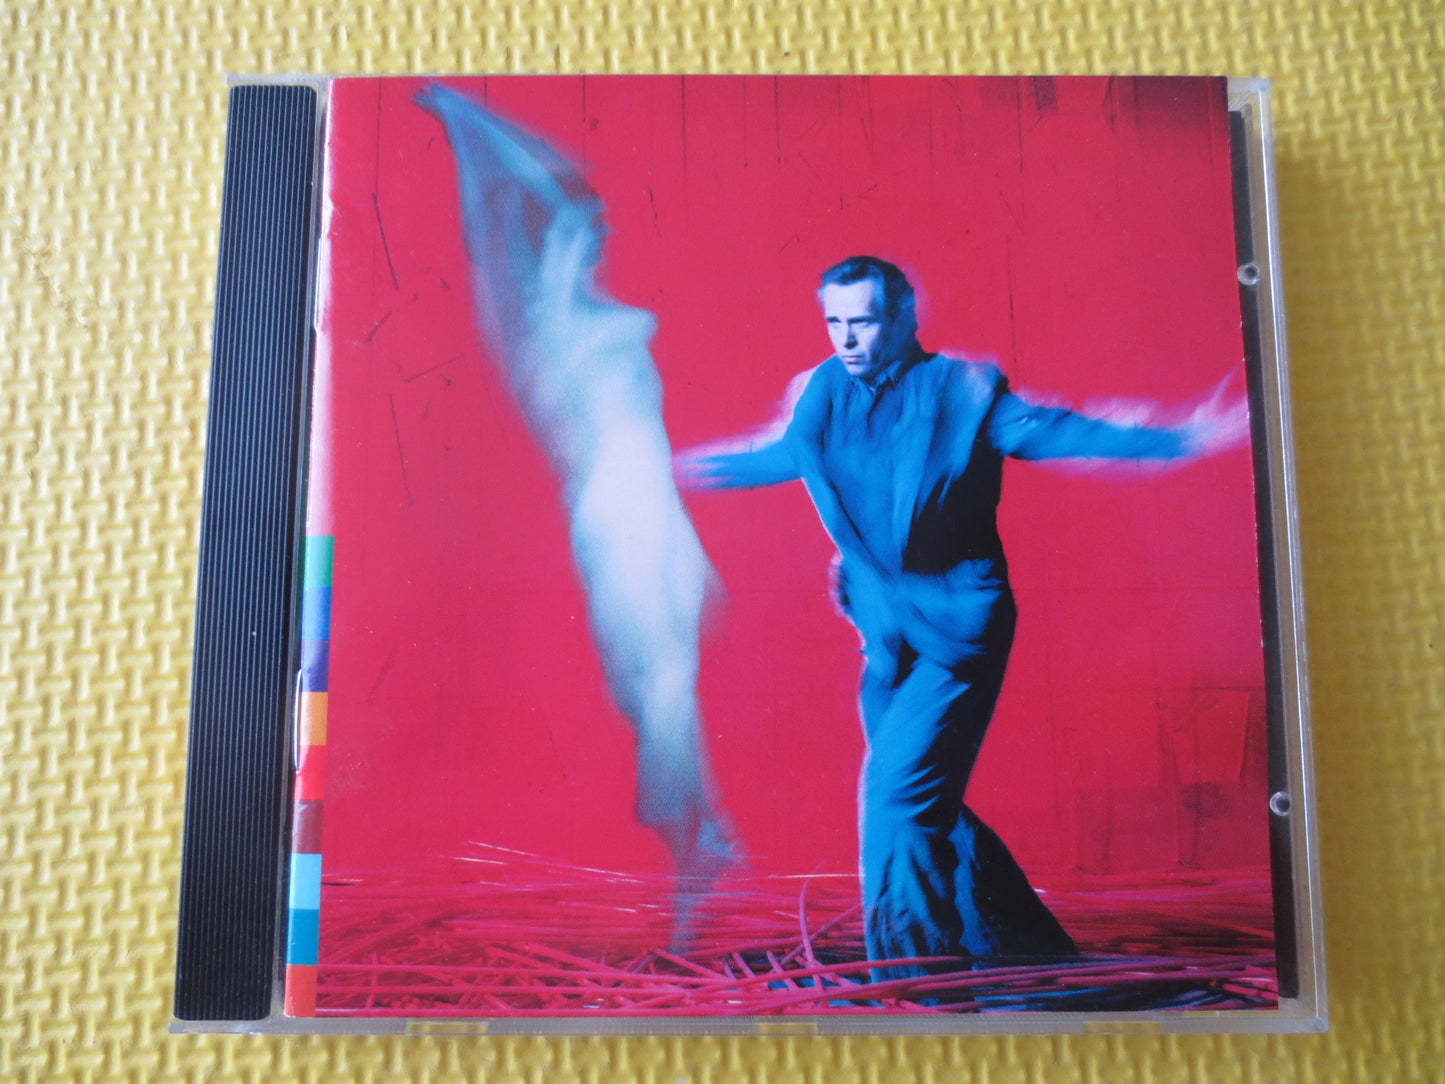 PETER GABRIEL, US, Peter Gabriel Cd, Peter Gabriel Lp, Peter Gabriel Album, Rock Music Cd, Compact Disc, Cds, 1992 Compact Disc